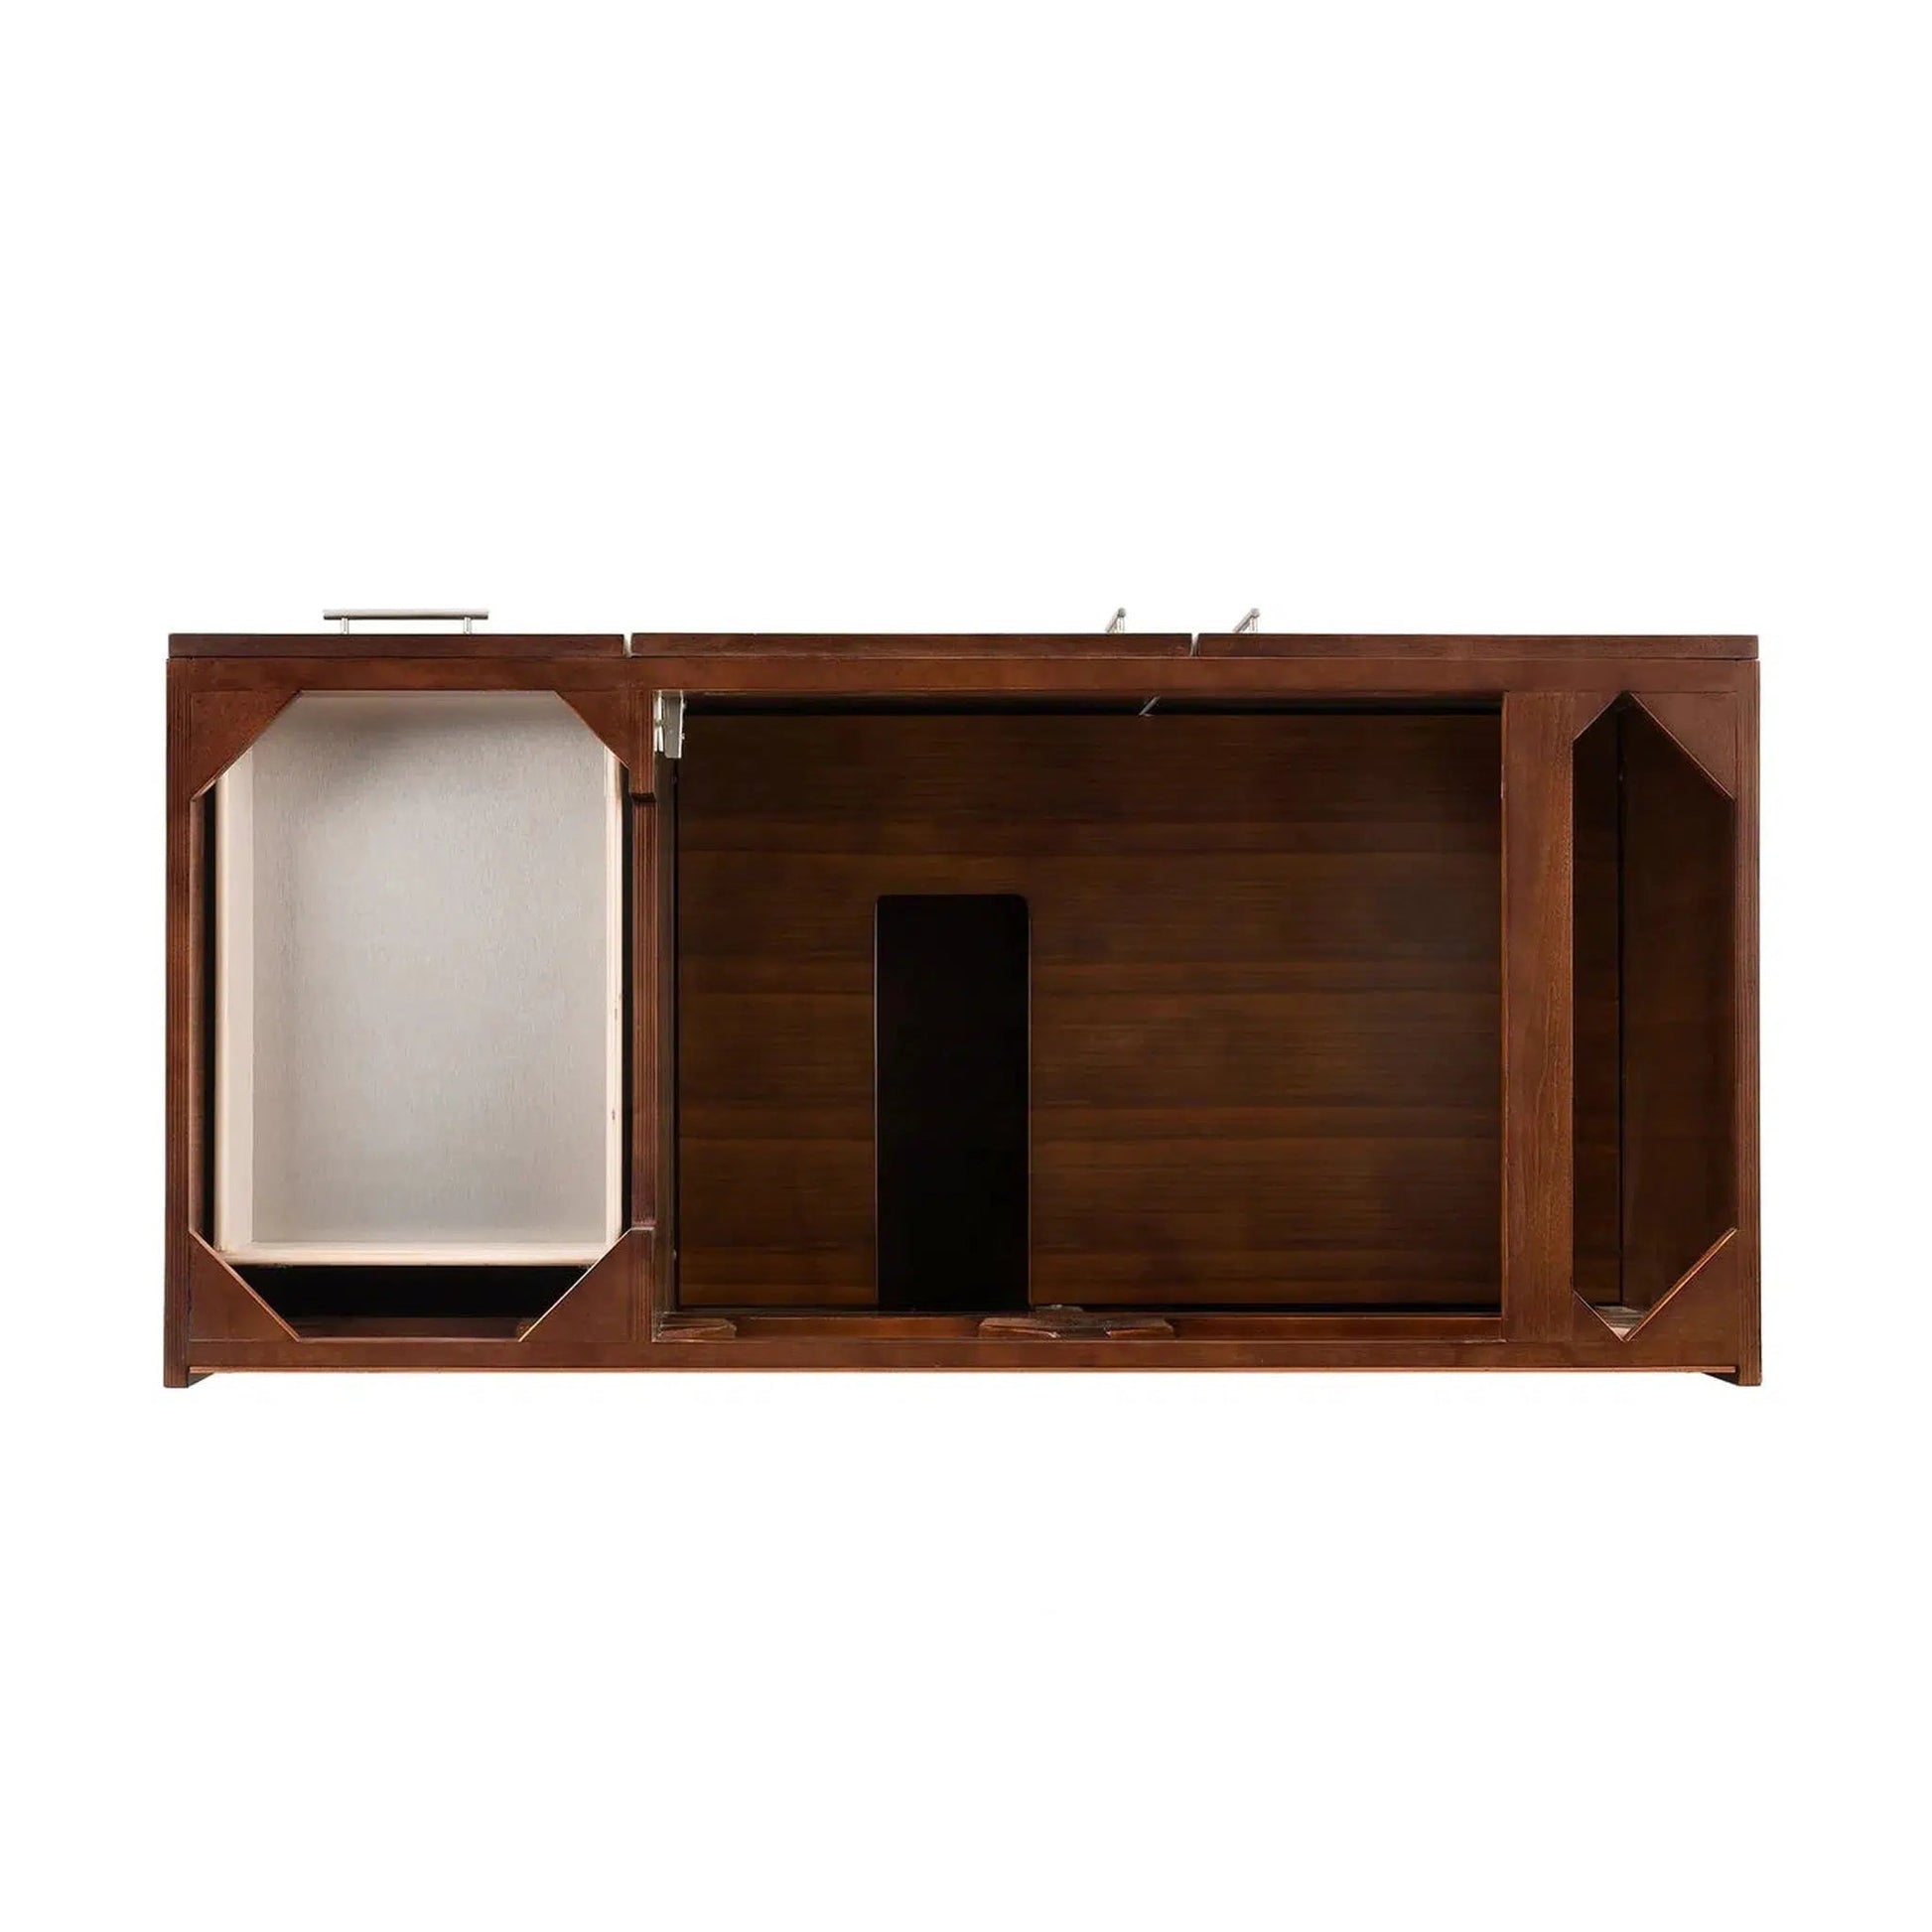 James Martin Metropolitan 48" Single American Walnut Bathroom Vanity With 1" Gray Expo Quartz Top and Rectangular Ceramic Sink